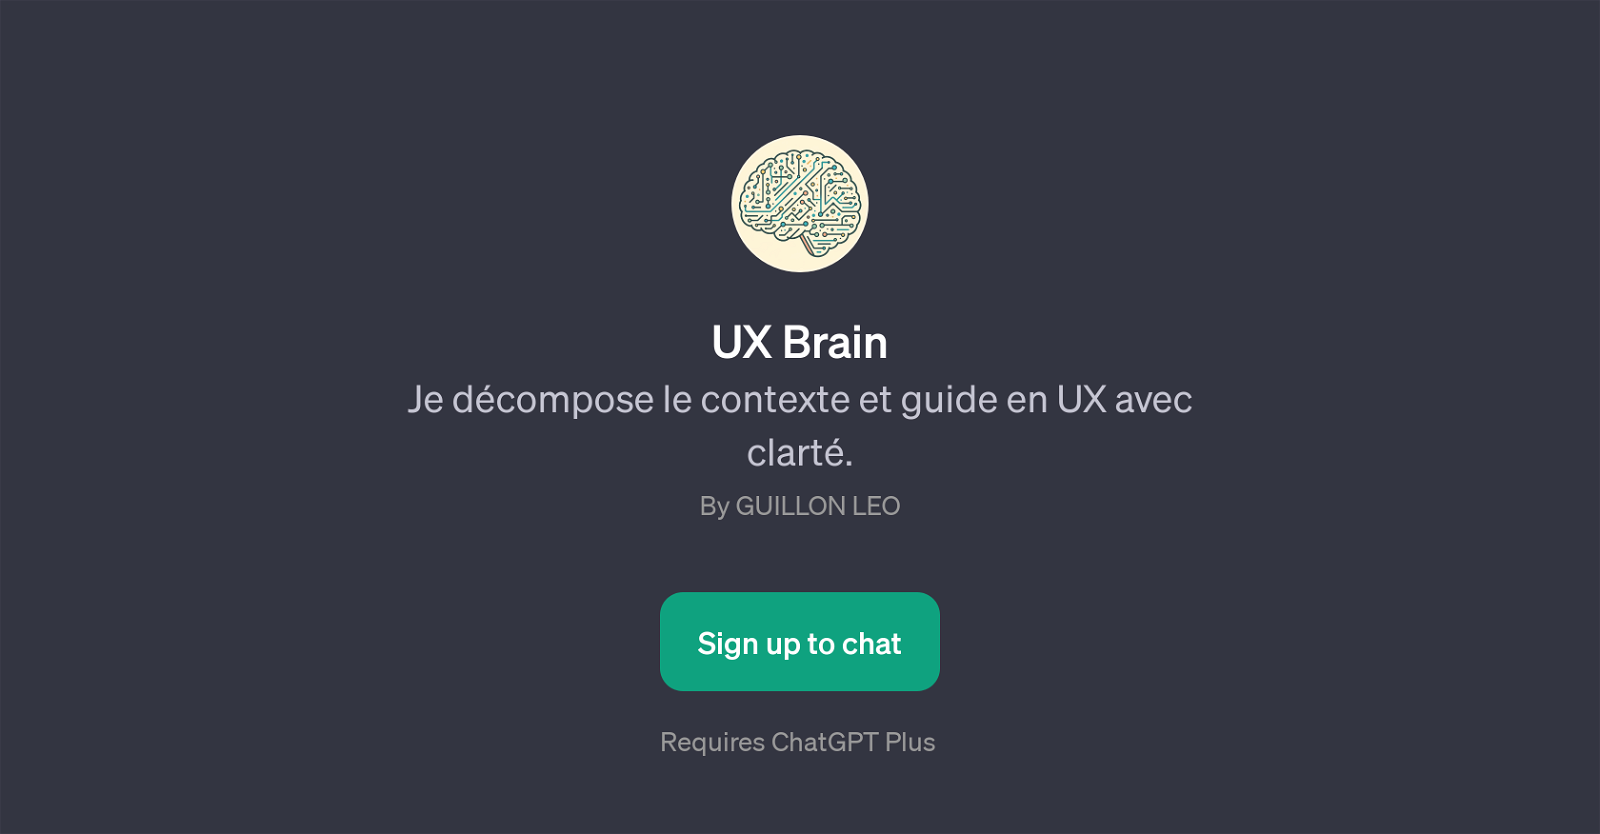 UX Brain website